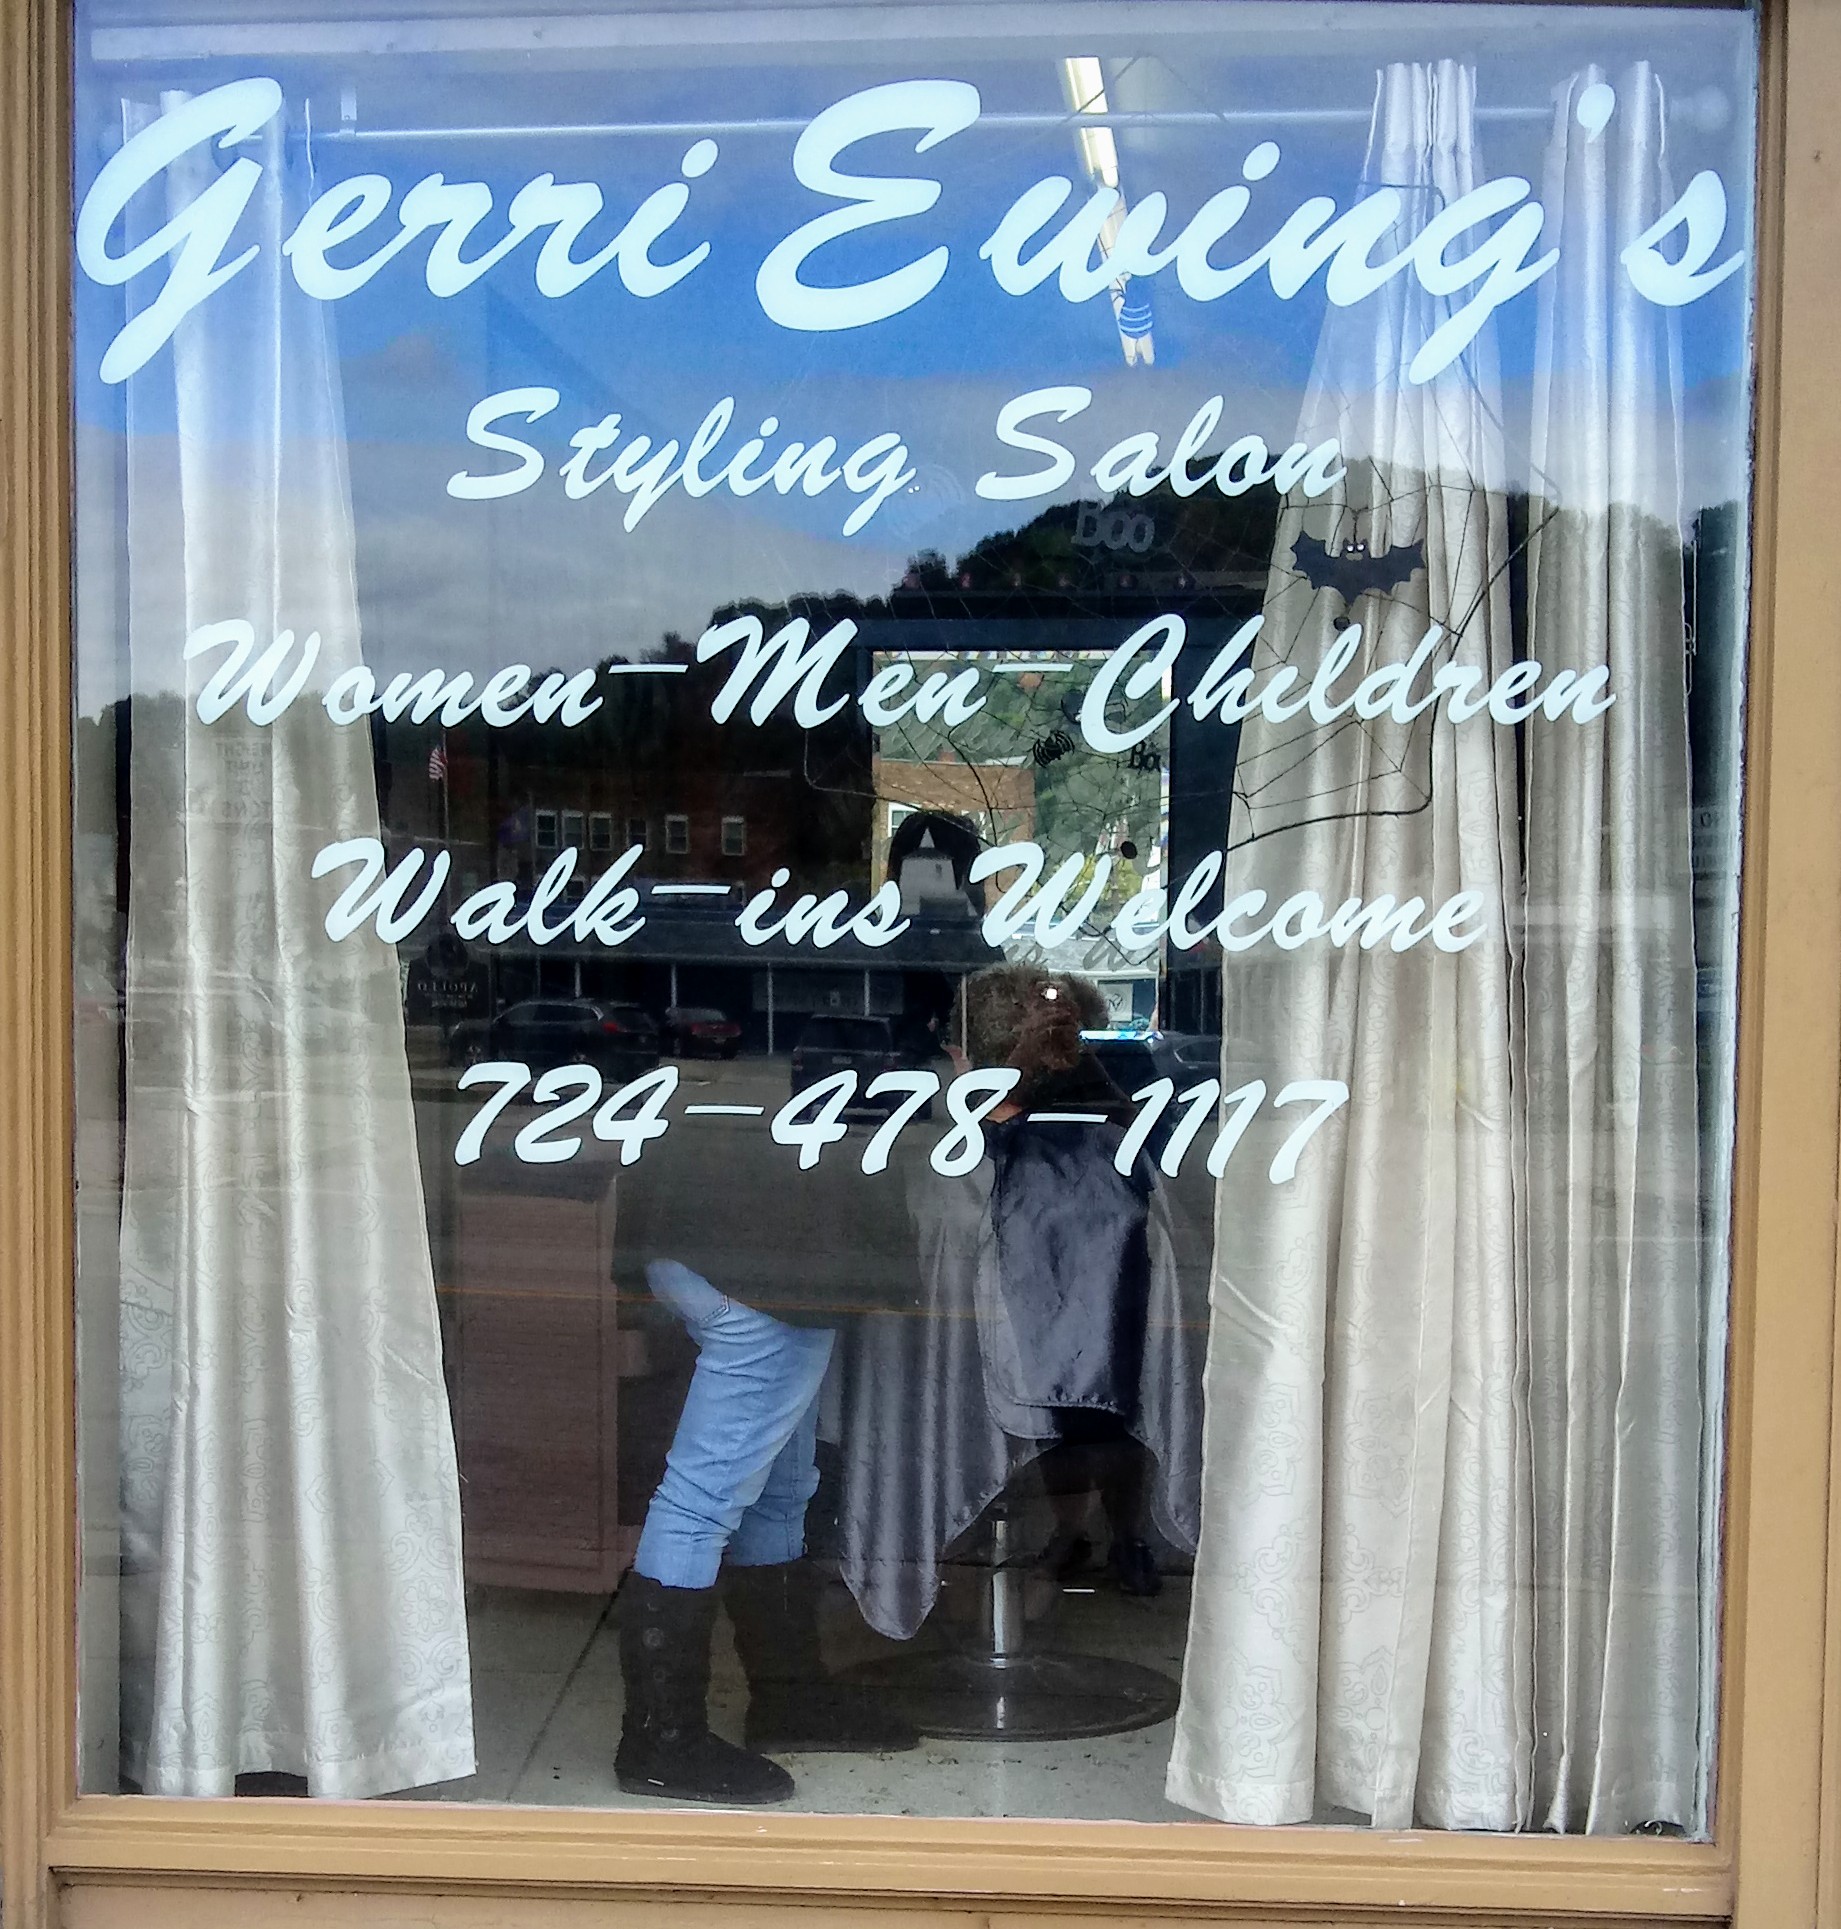 Gerri Ewing Styling Salon